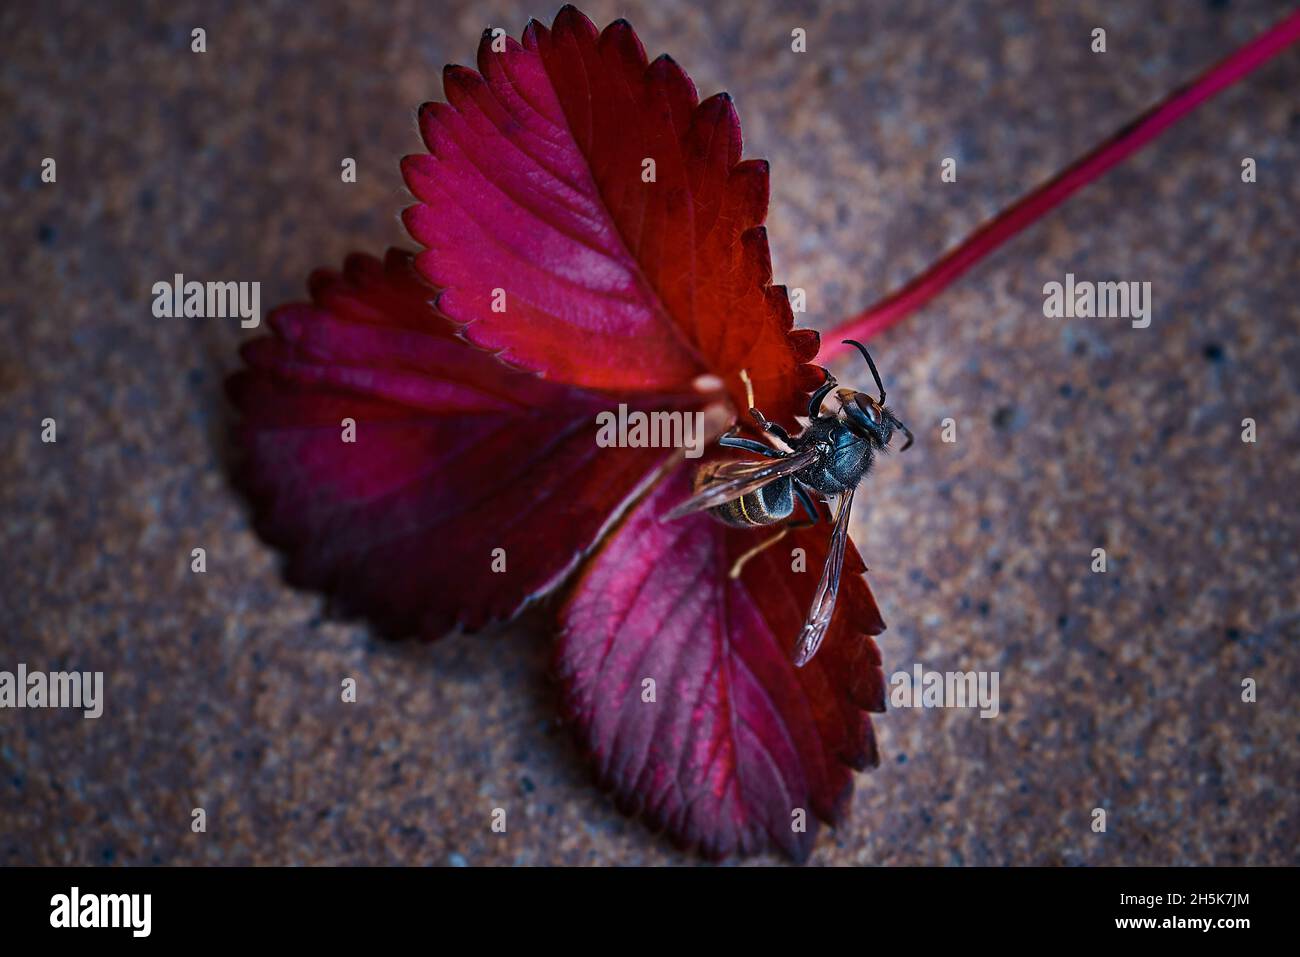 Asian wasp, Vespa velutina, on reddish leaf of a fallen strawberry plant in autumn Stock Photo